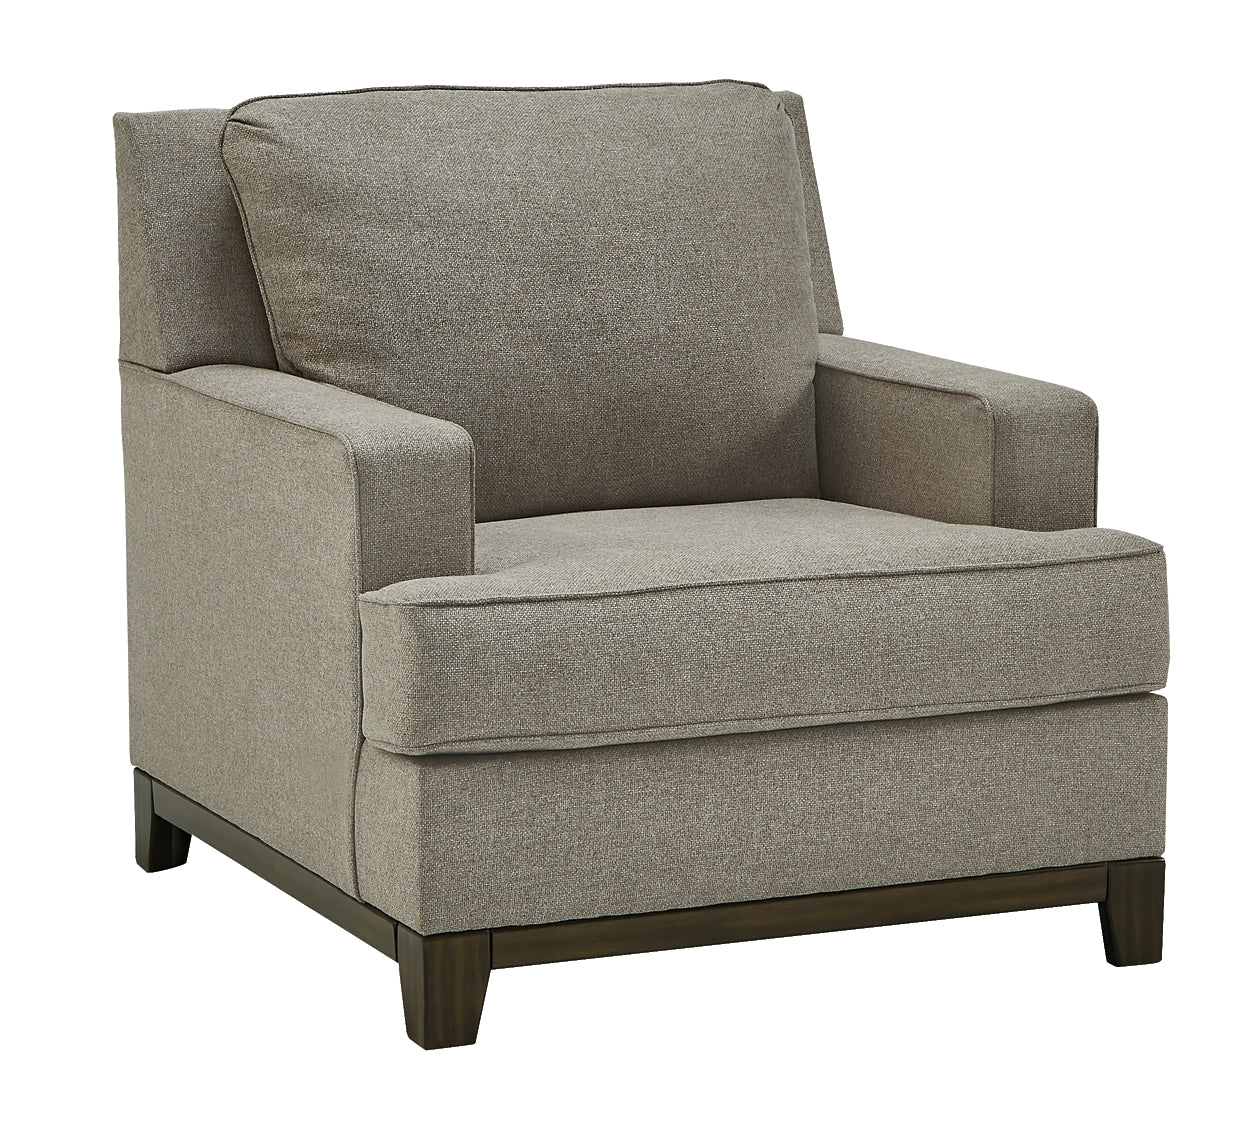 Kaywood Chair at Cloud 9 Mattress & Furniture furniture, home furnishing, home decor